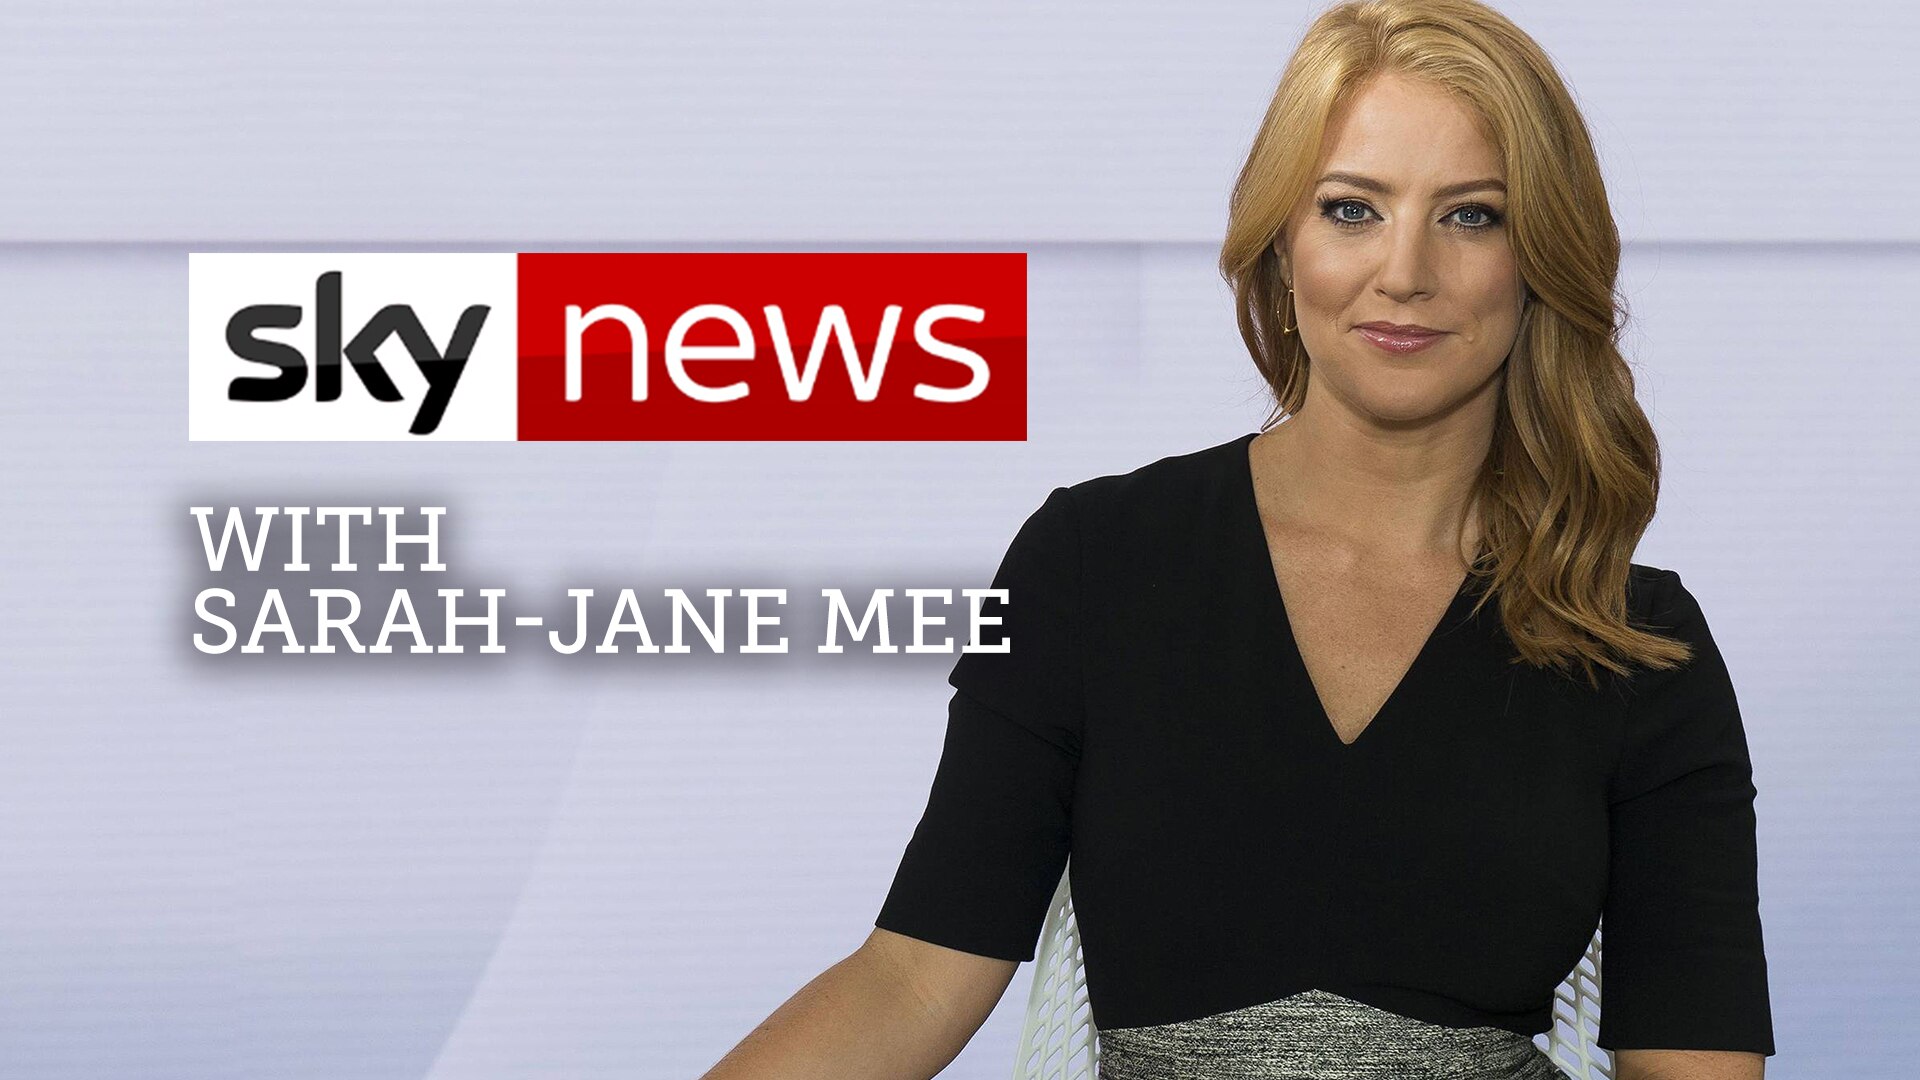 Sky News with Sarah-Jane Mee